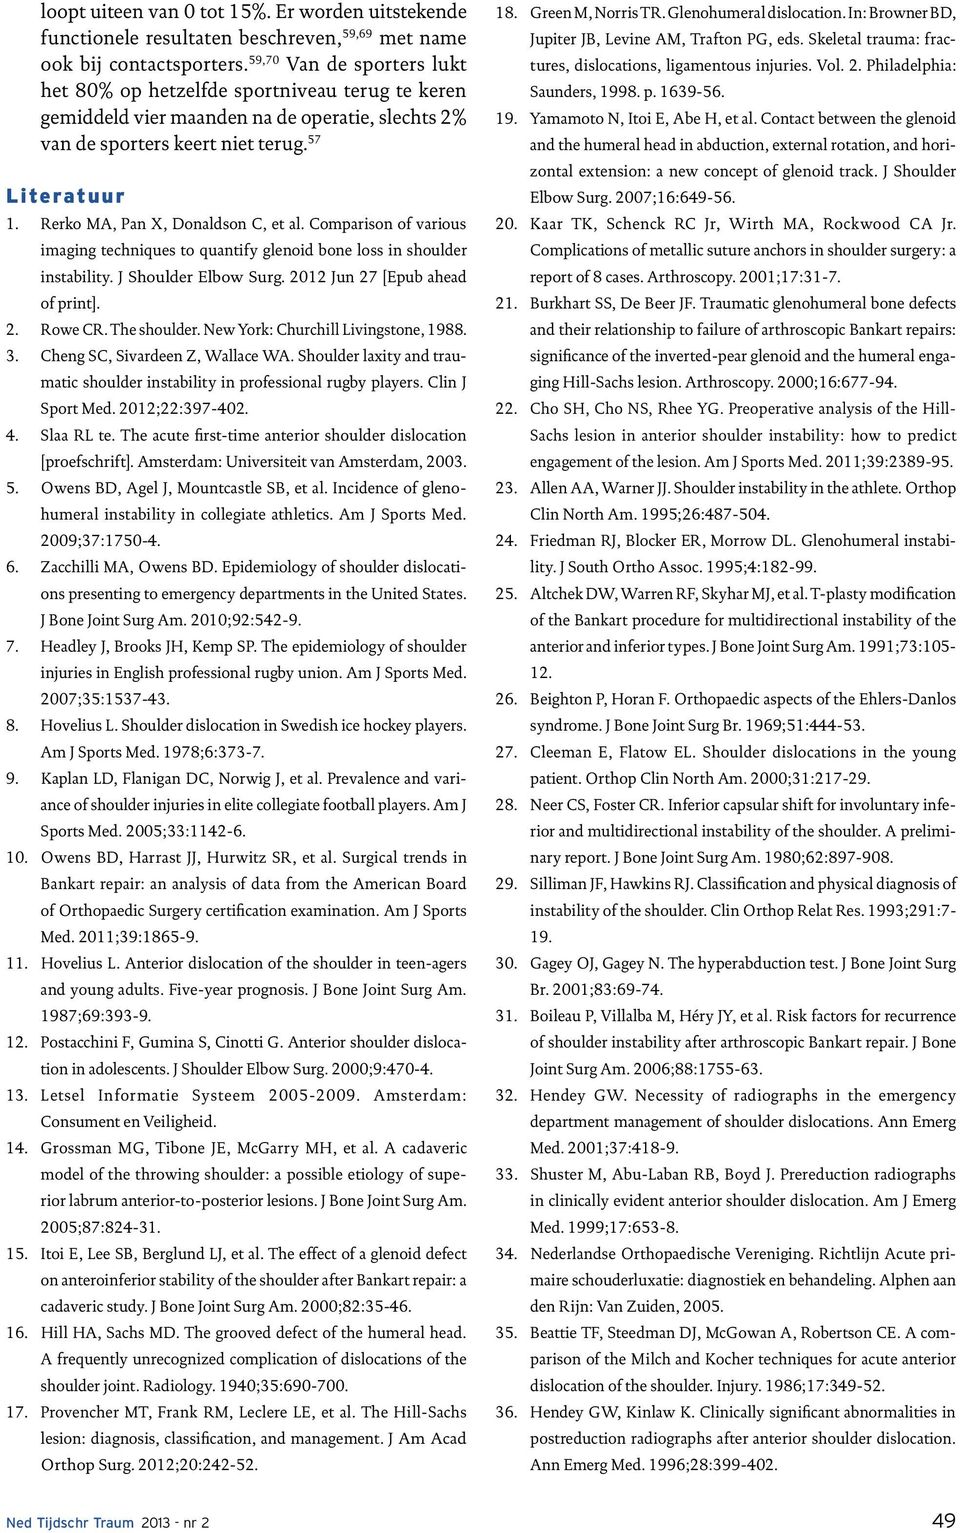 Rerko MA, Pan X, Donaldson C, et al. Comparison of various imaging techniques to quantify glenoid bone loss in shoulder instability. J Shoulder Elbow Surg. 2012 Jun 27 [Epub ahead of print]. 2. Rowe CR.